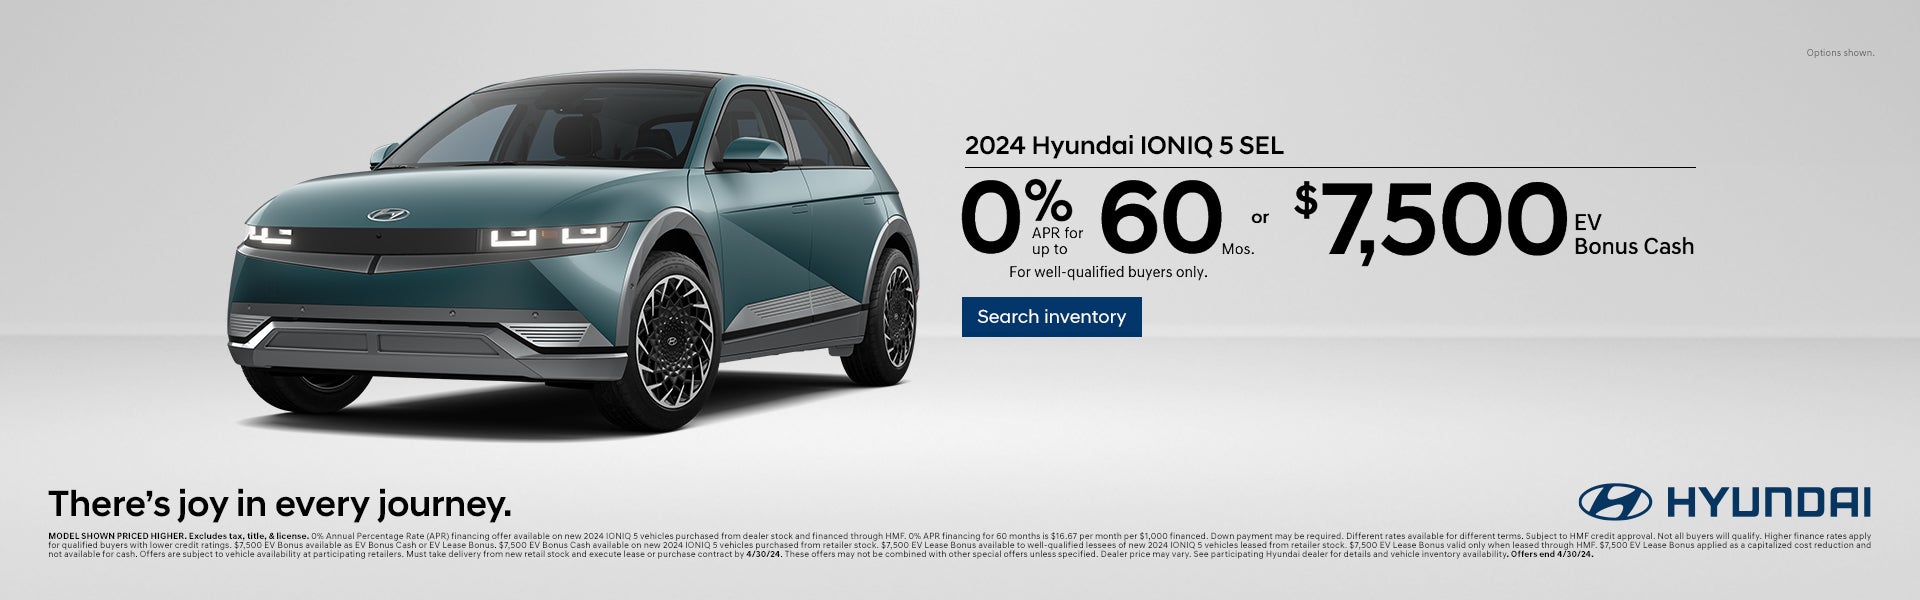 2024 Hyundai IONIQ 5 Sel offer